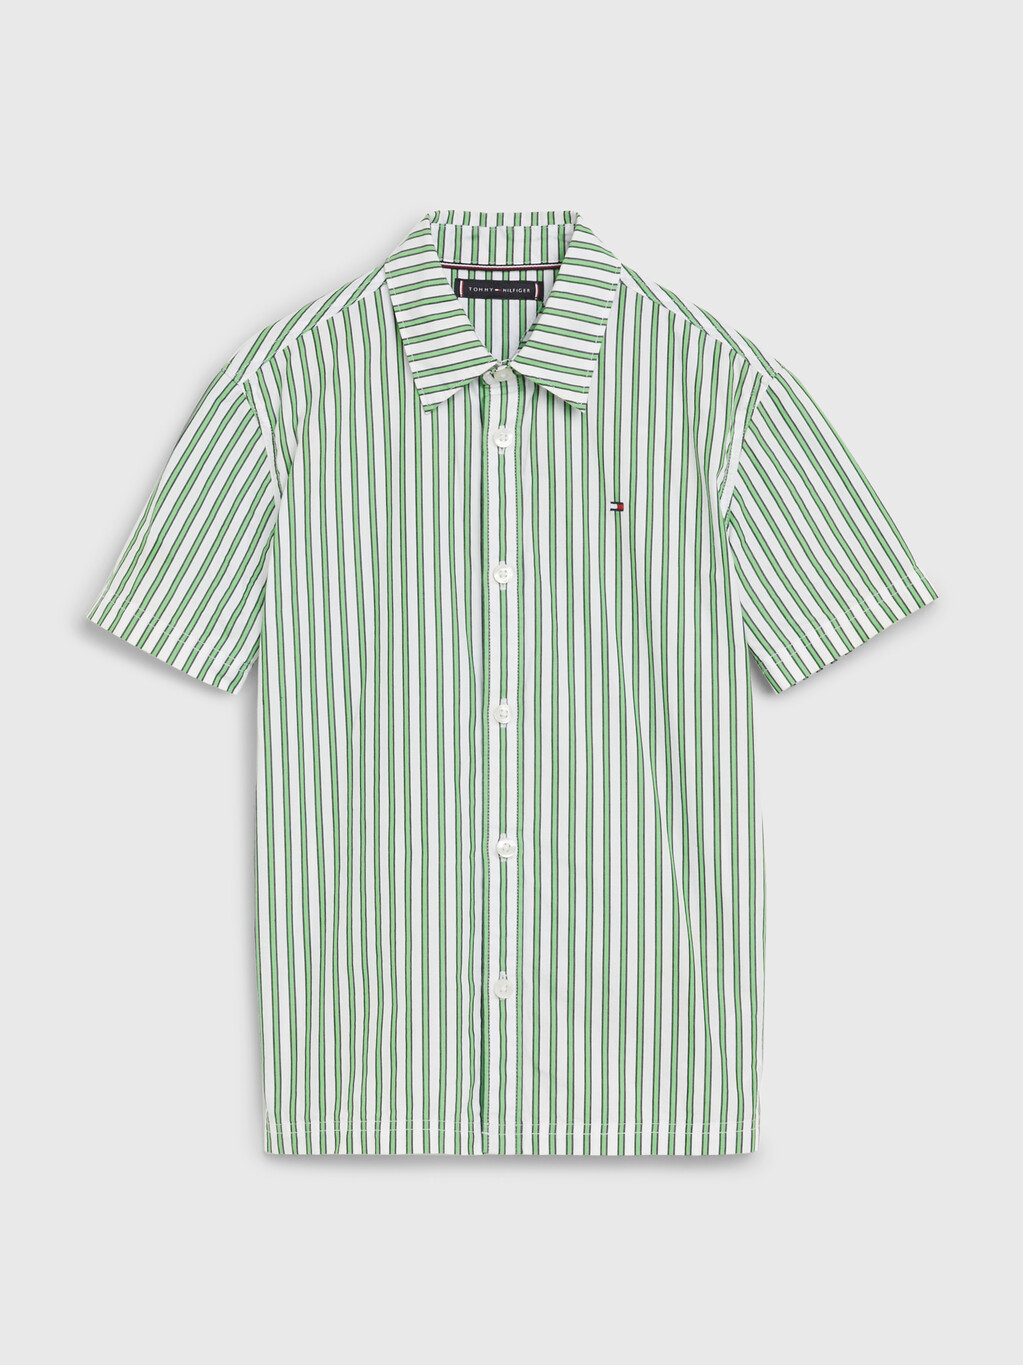 Stripe Short Sleeve Shirt, Spring Lime Stripe, hi-res